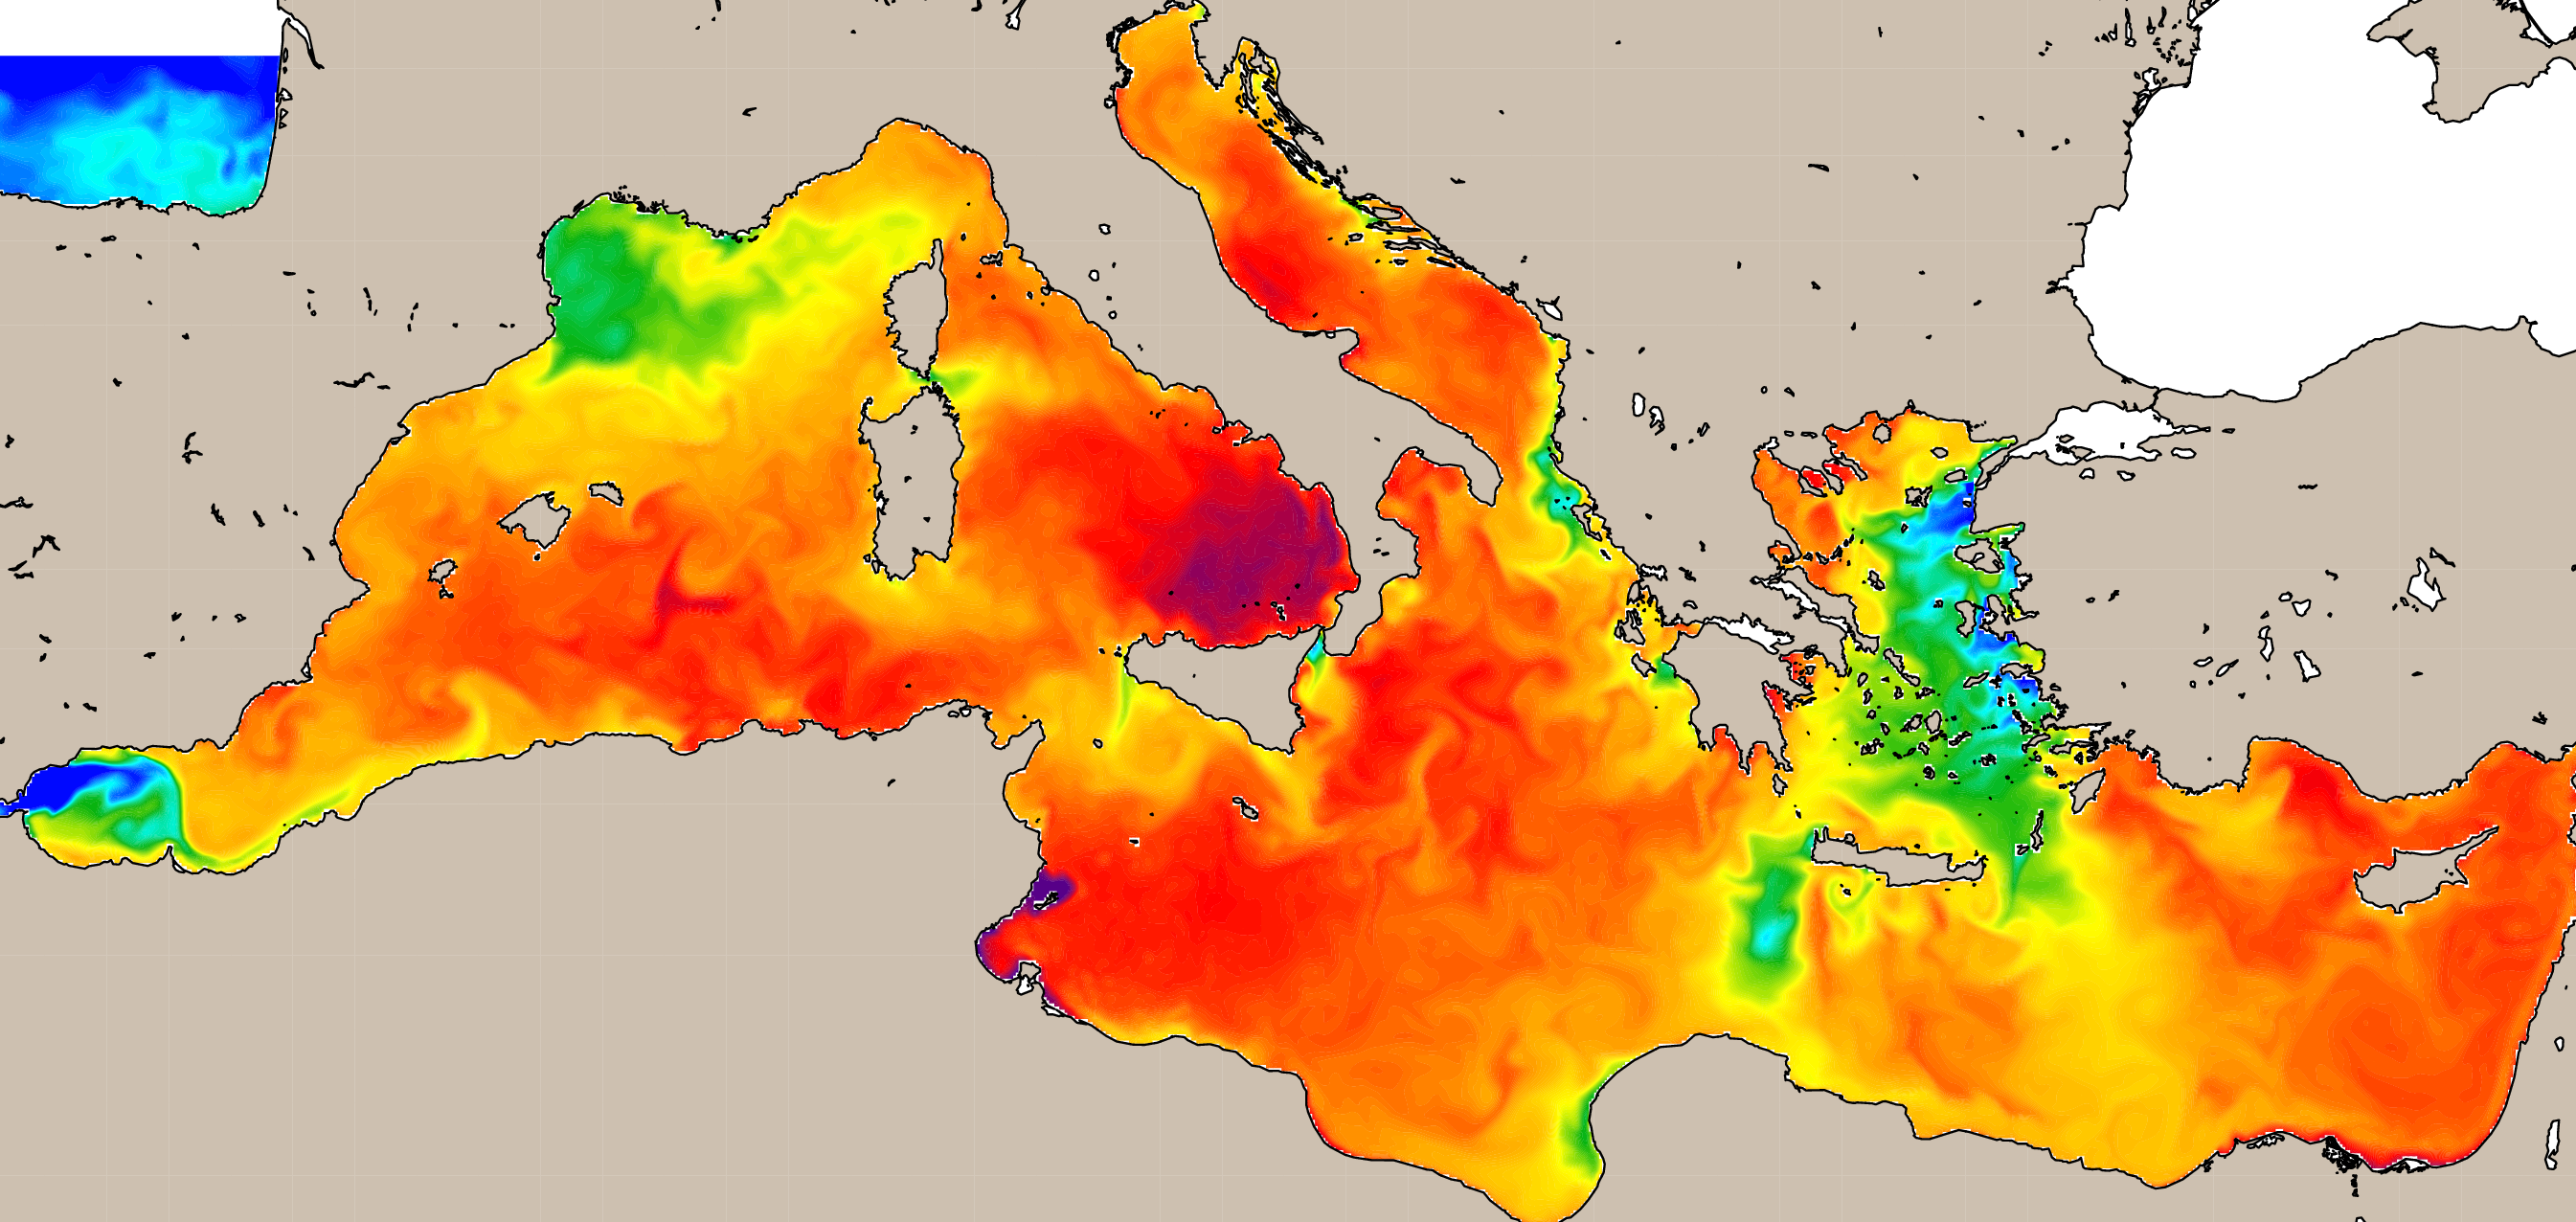 Over 30°C: Marine Heatwaves currently hitting the Mediterranean